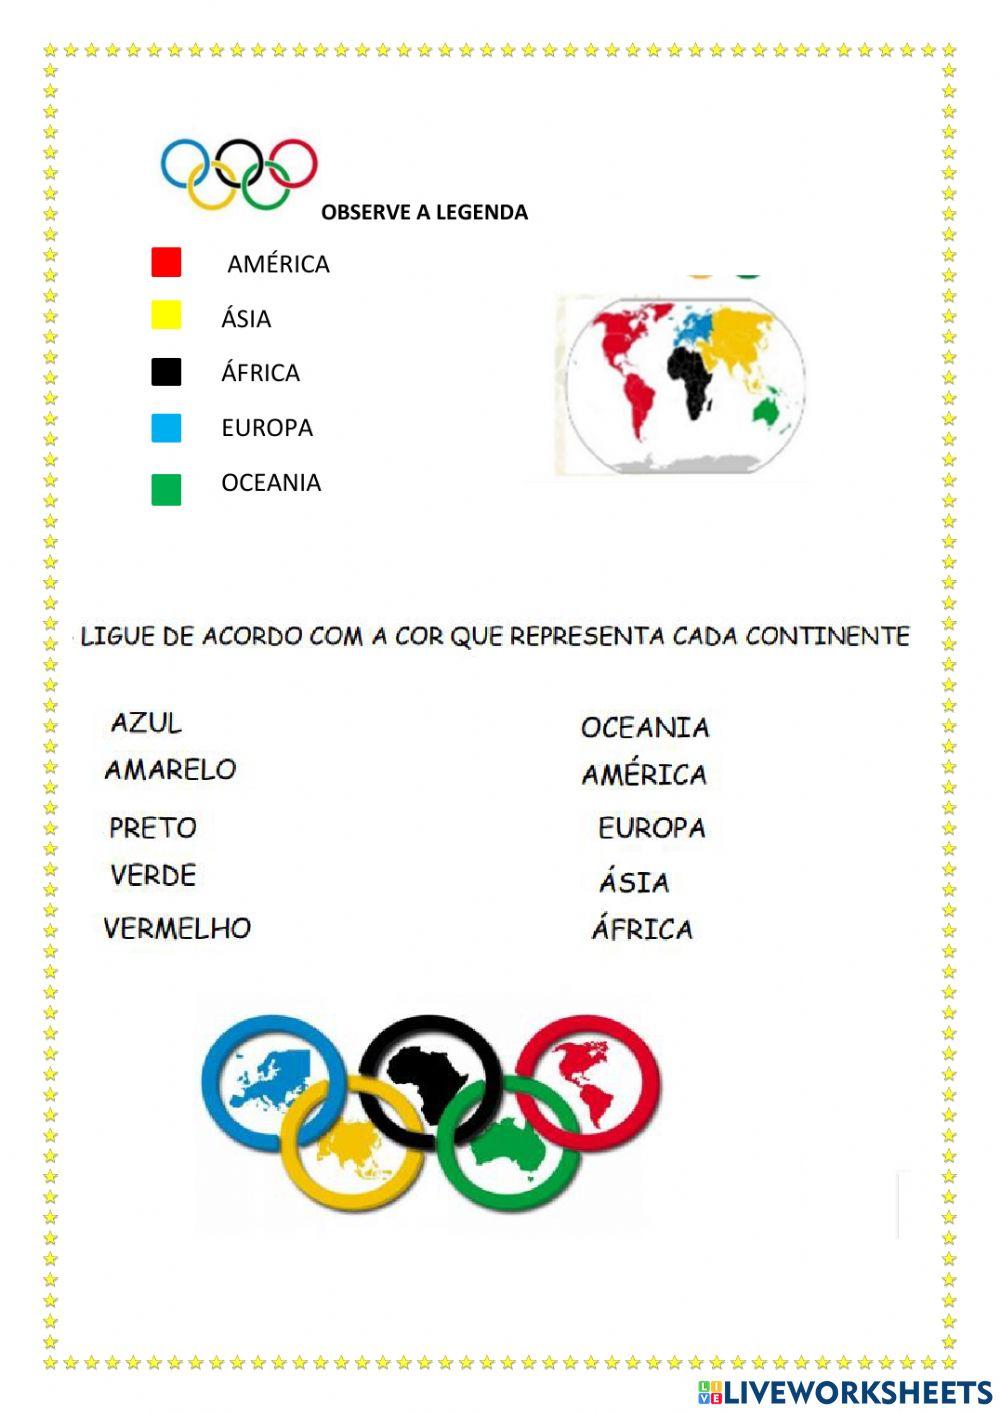 Continentes e anéis olimpicos